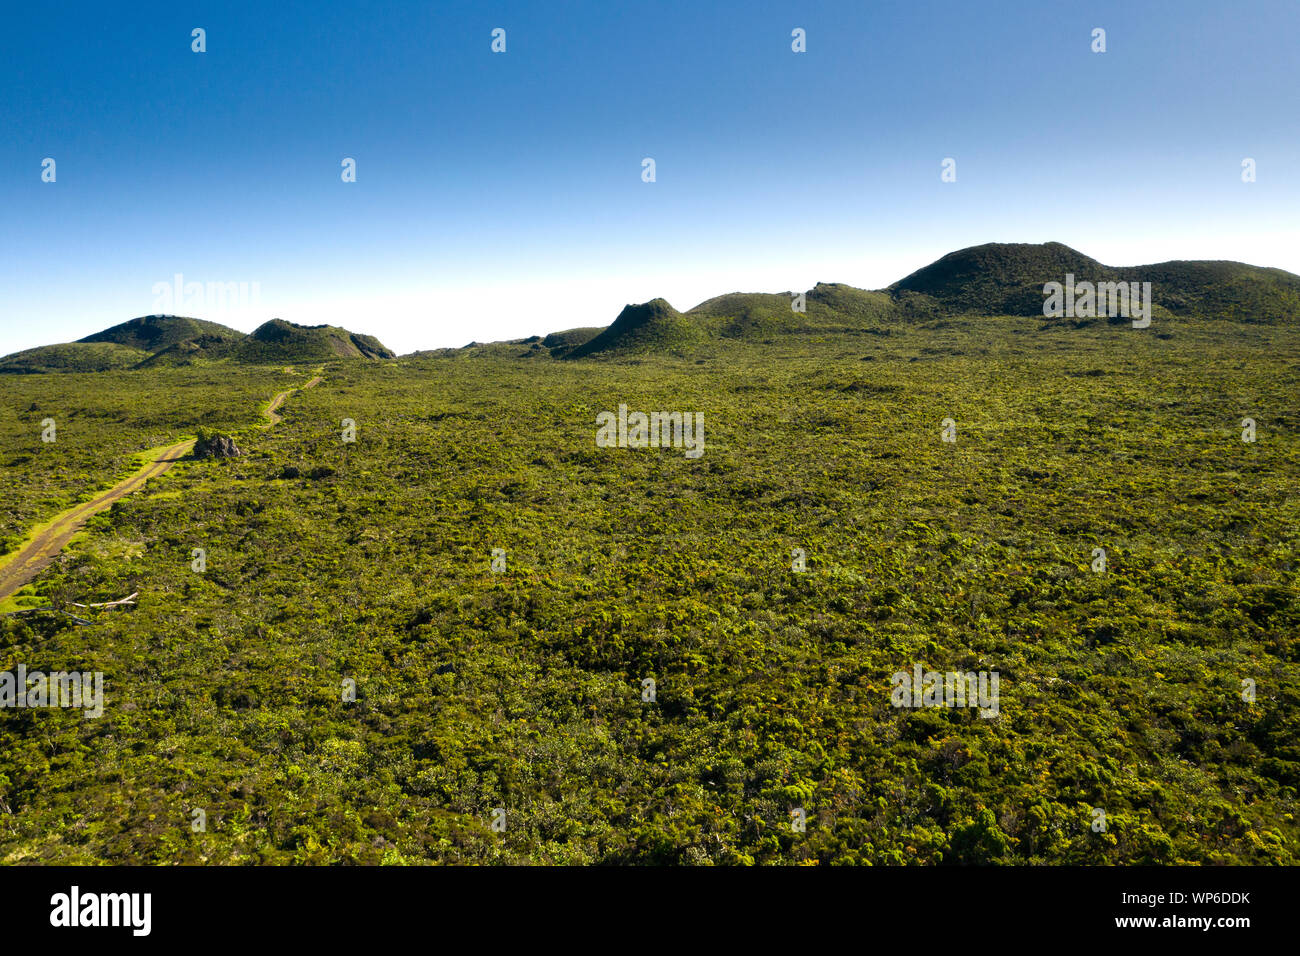 Aerial image of typical green volcanic caldera crater landscape with volcano cones of Planalto da Achada central plateau of Ilha do Pico Island, Azore Stock Photo